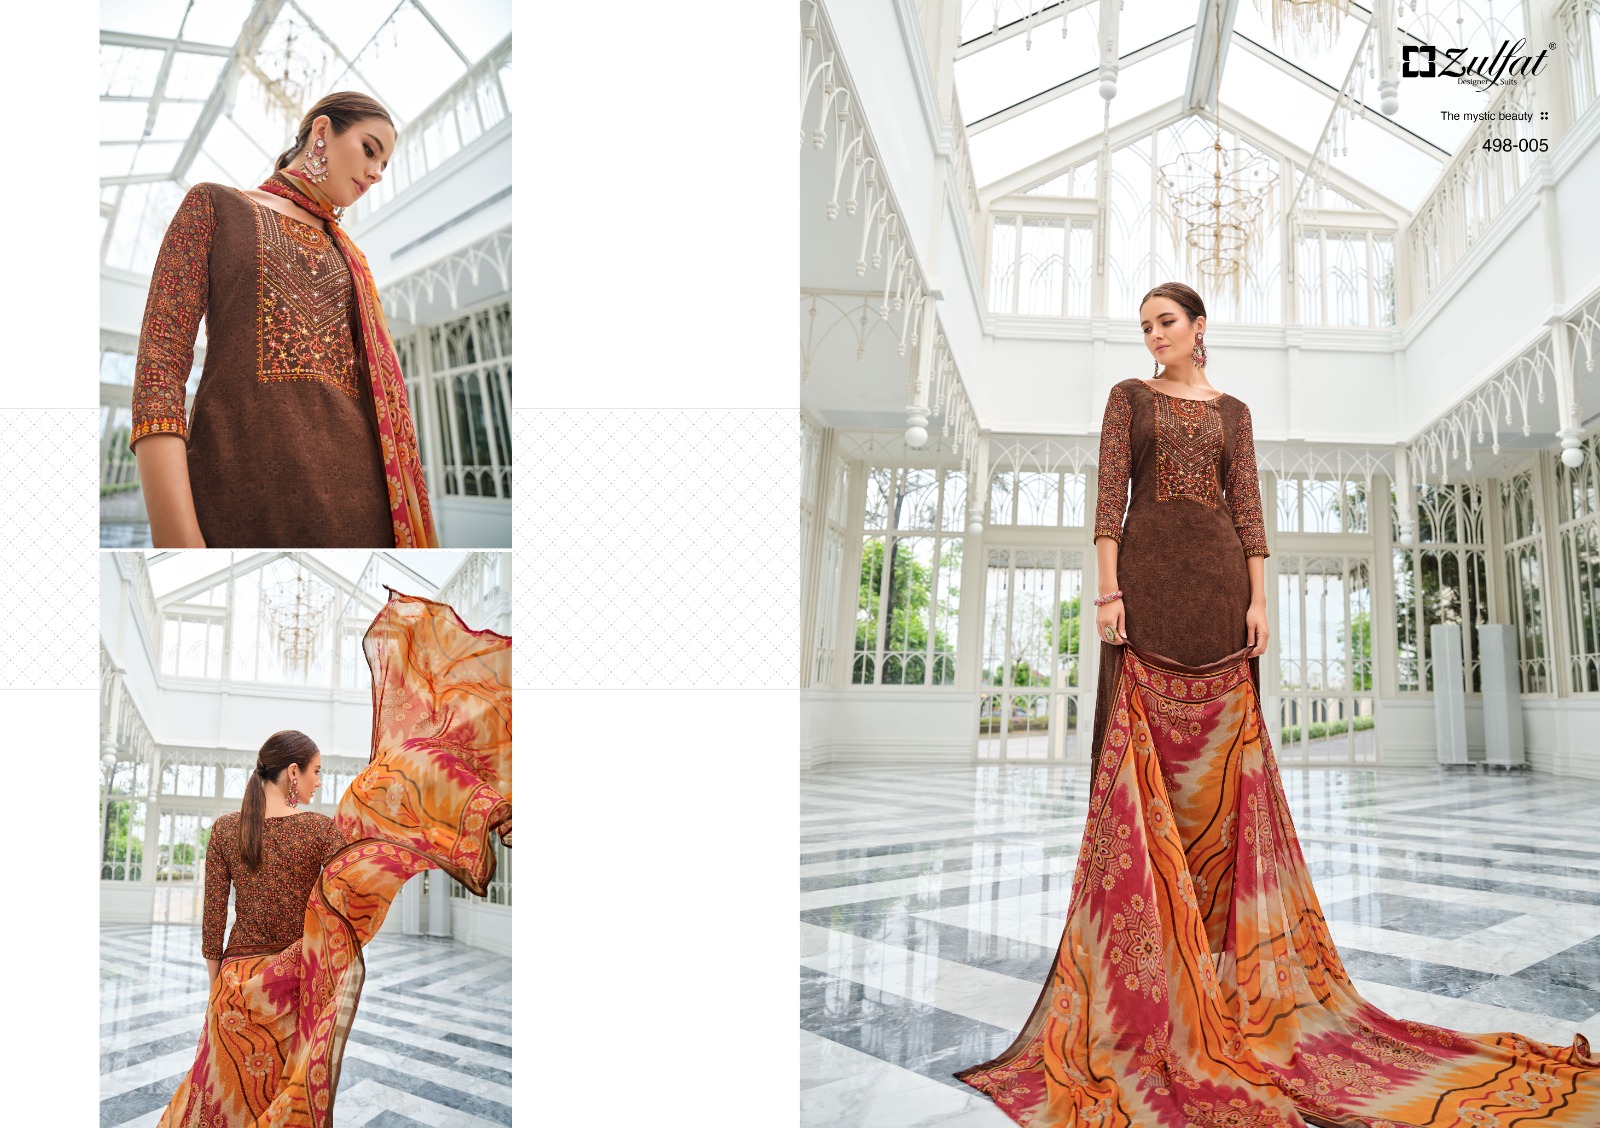 zulfat designer suit jashn viscose regal look salwar suit catalog